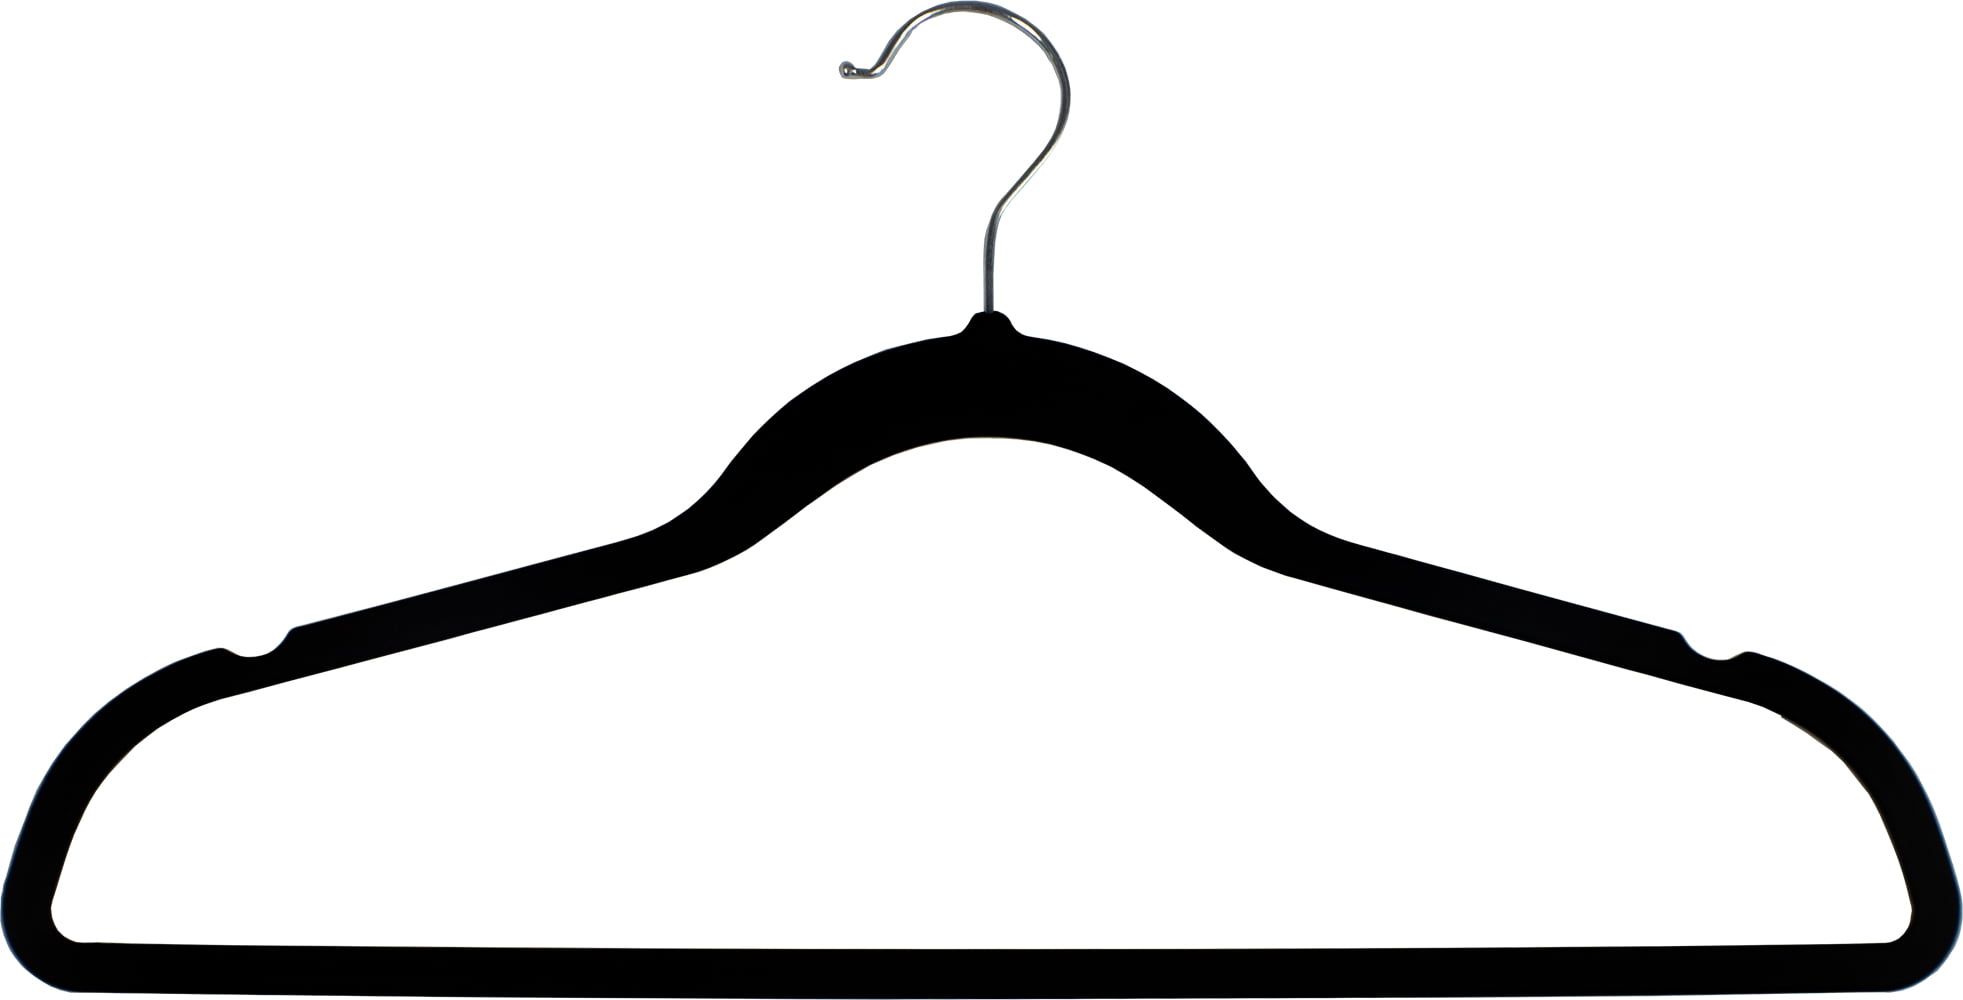 Slim-Line Black Shirt Hangers - Closet Hanger Factory